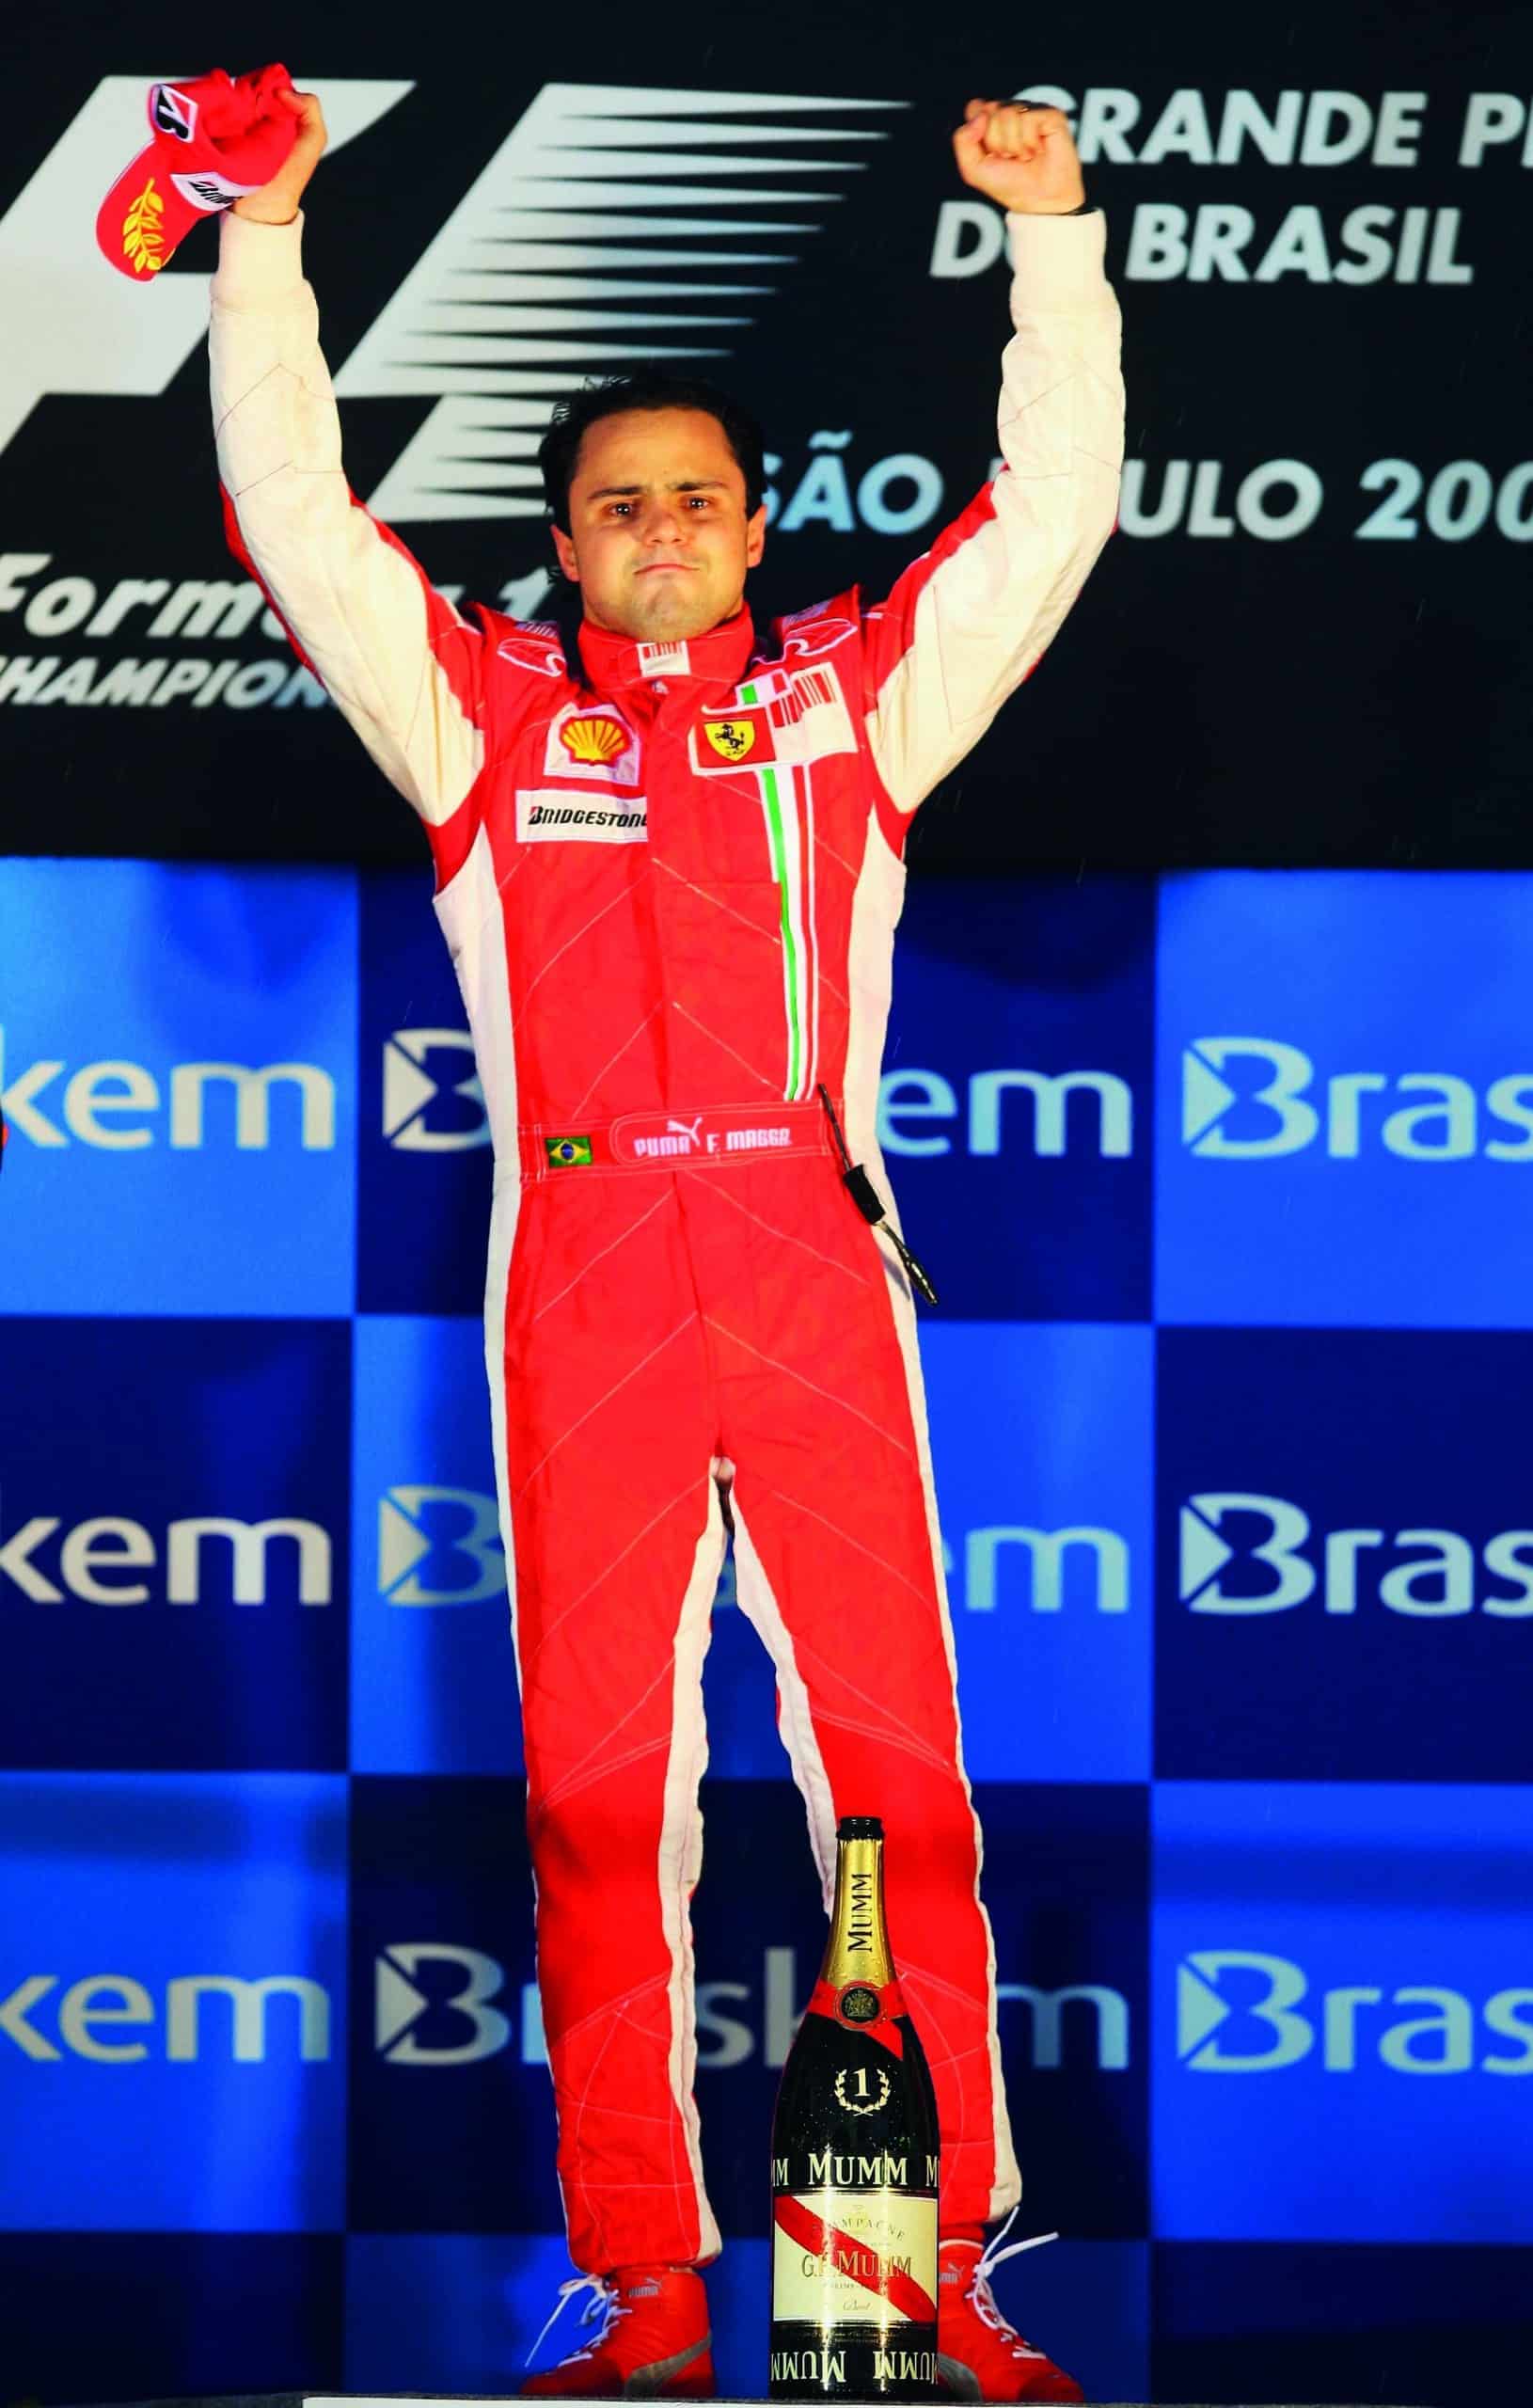 Felipe-Massa-on-the-podium-after-winning-the-2008-Brazilian-Grand-Prix-at-Interlagos-for-Ferrari-but-losing-the-championship